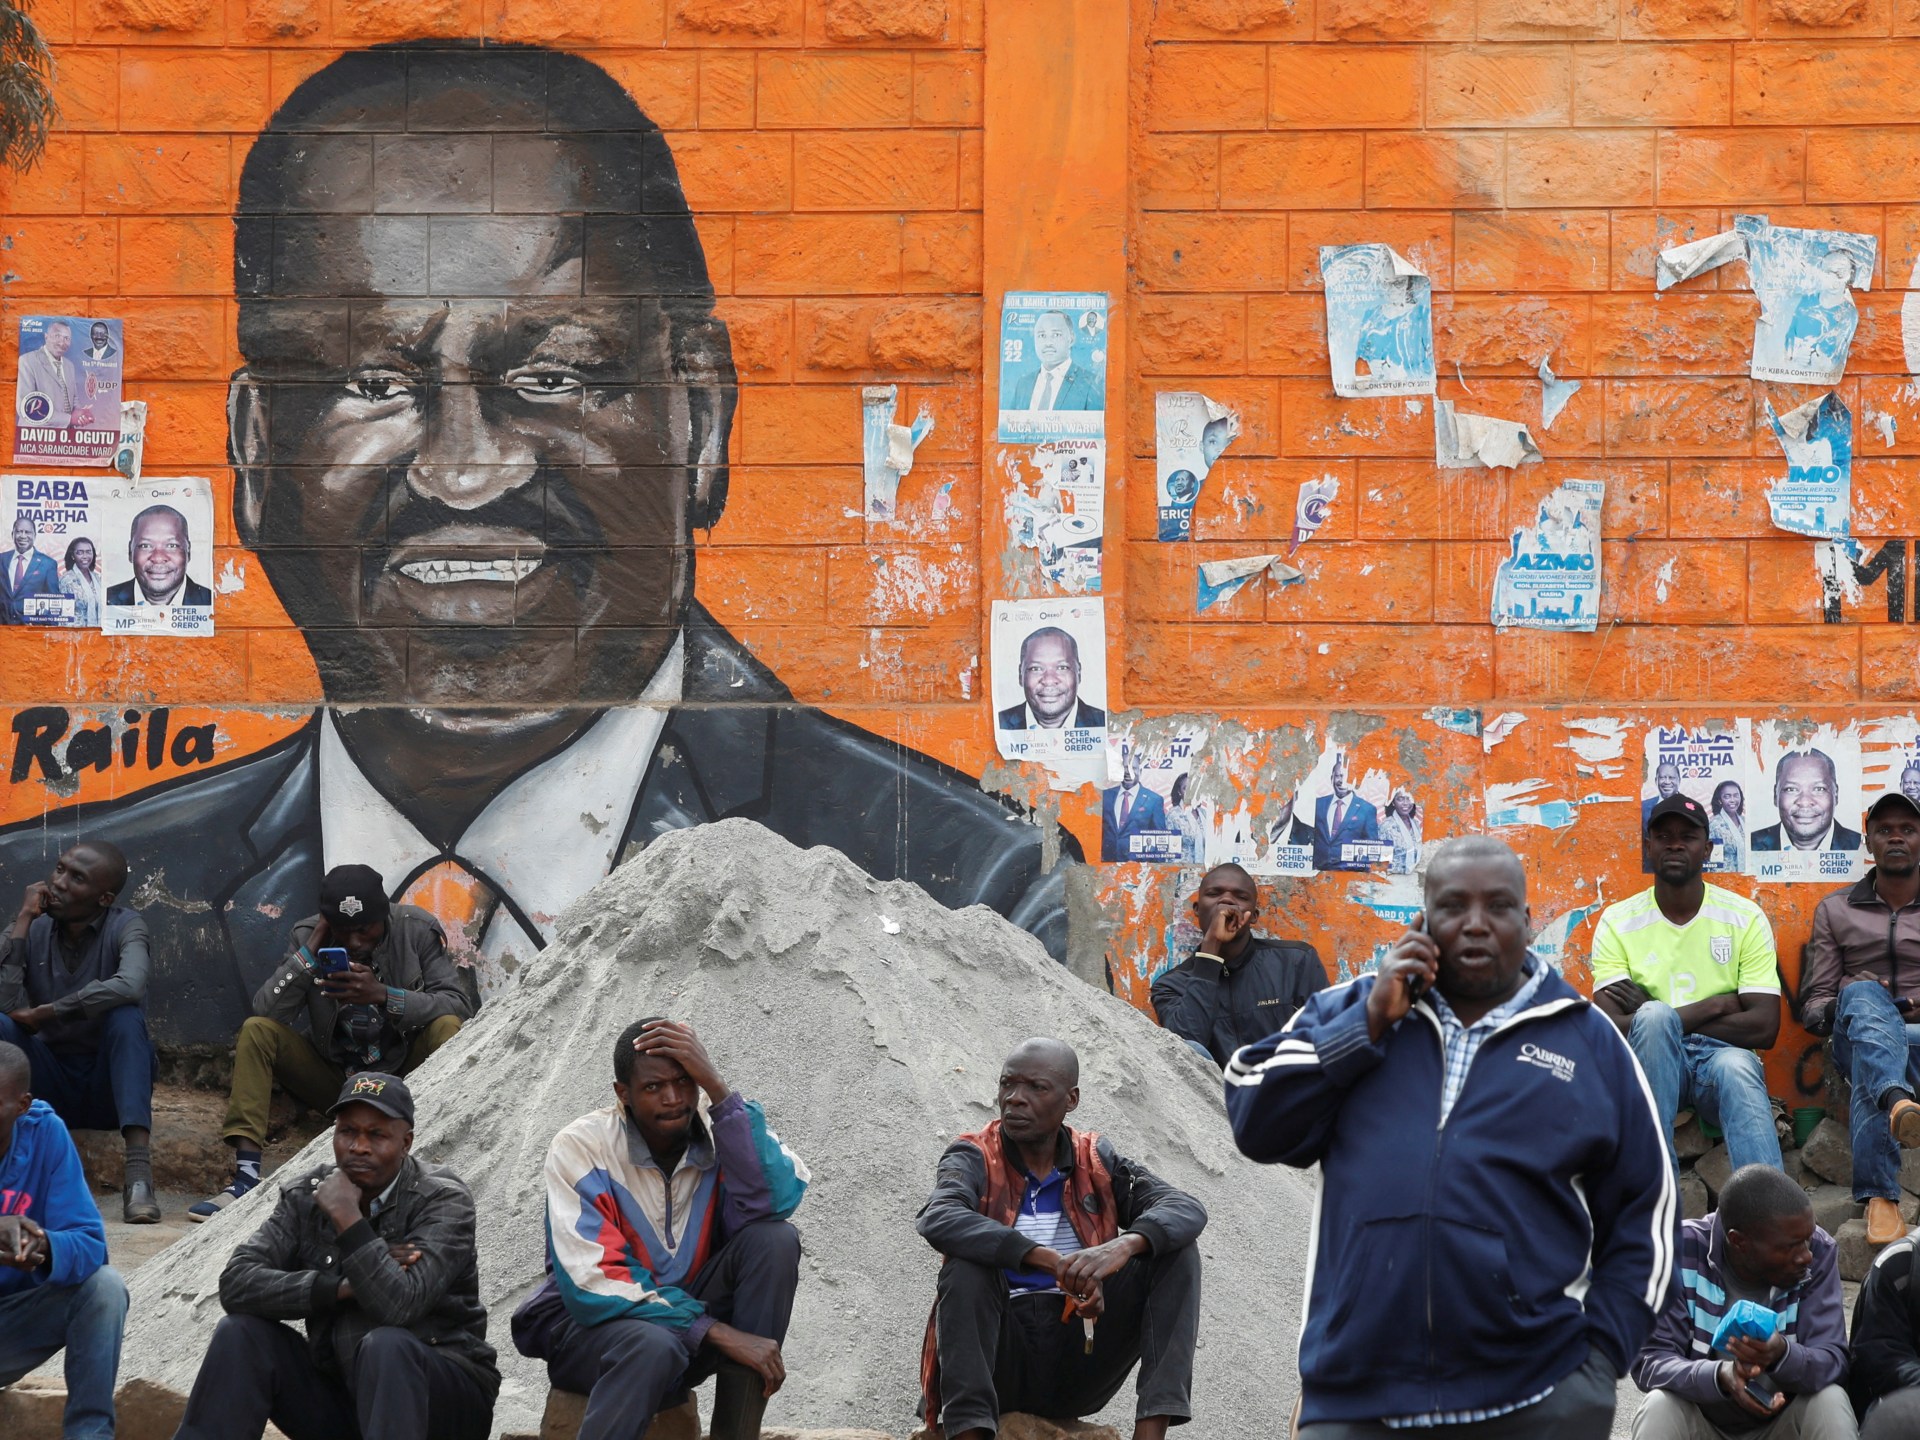 Raila Odinga ahead in Kenya’s presidential race: Early results - aljazeera